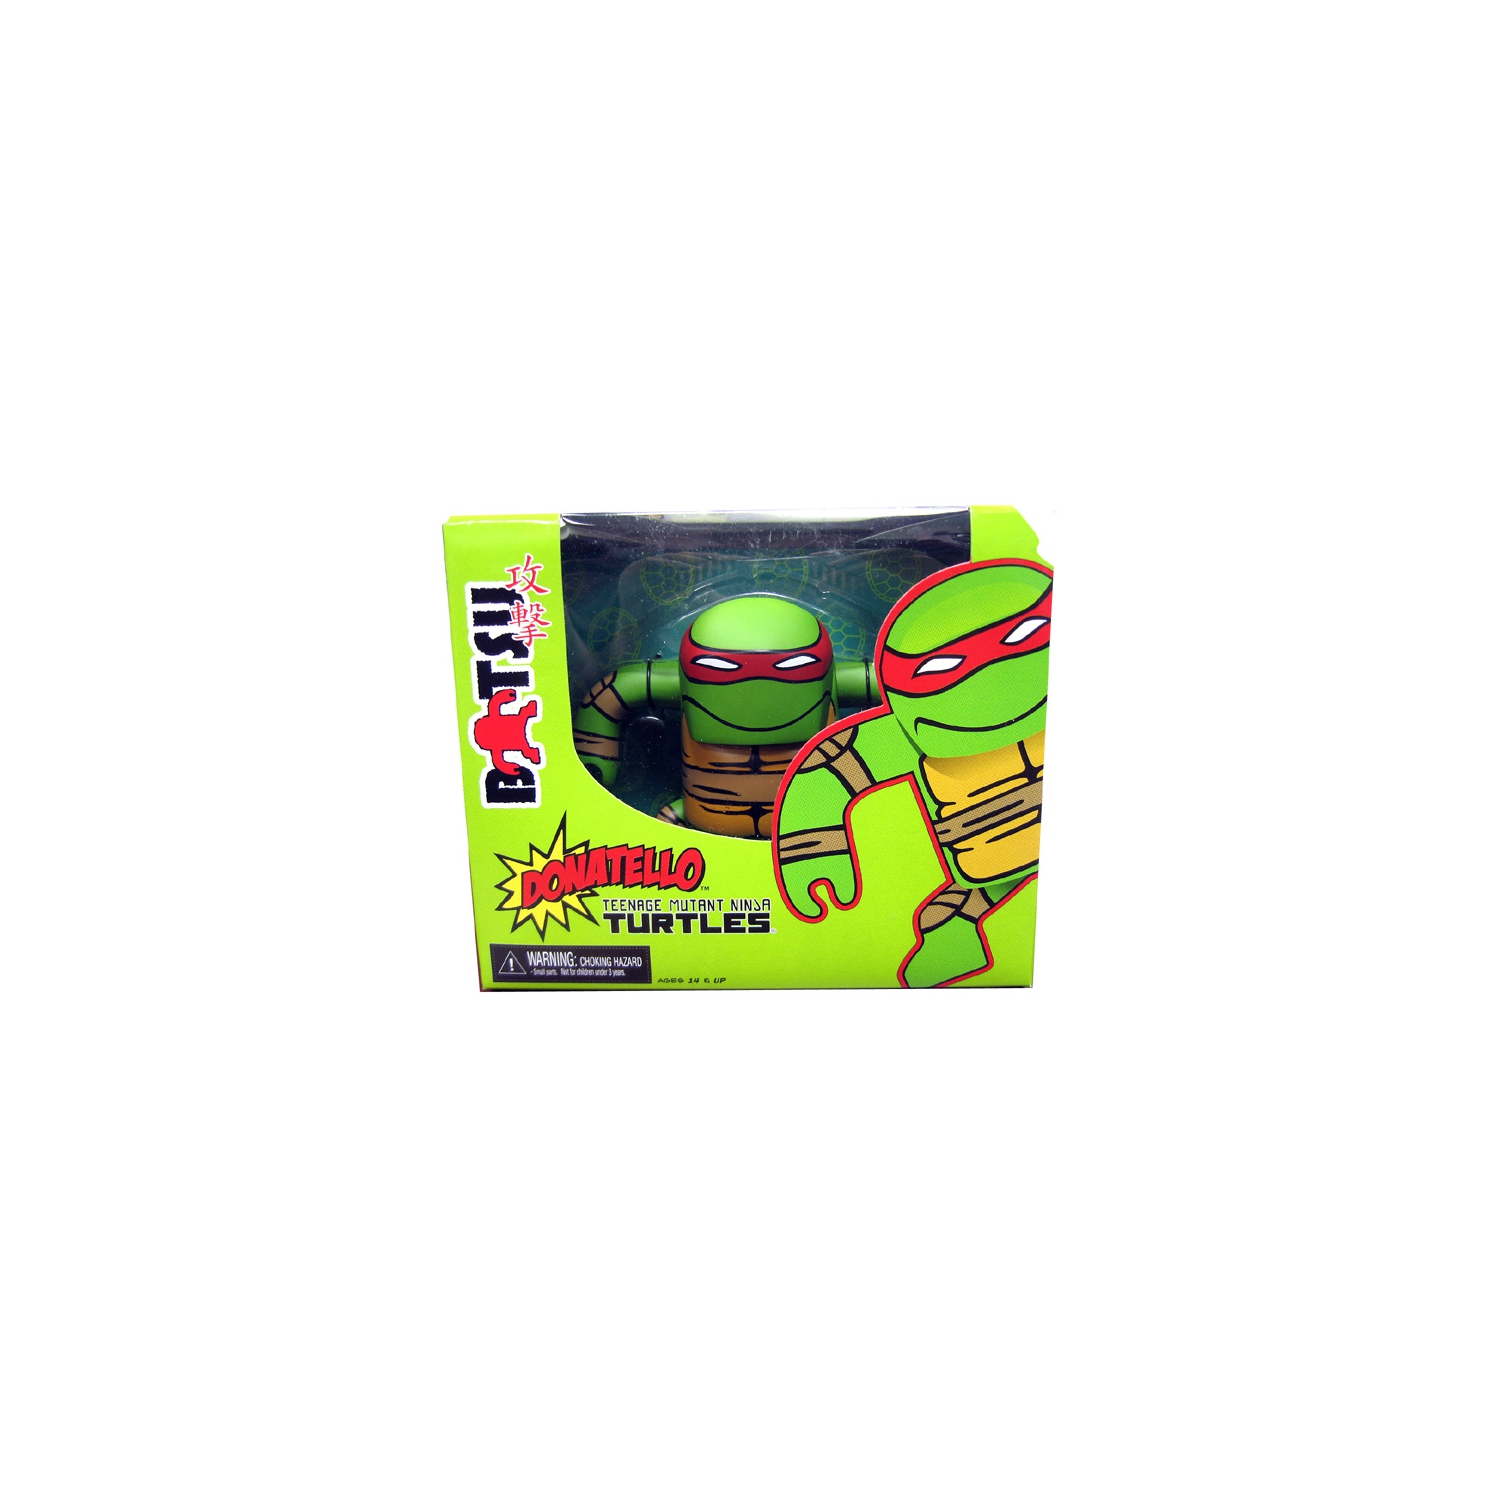 Teenage Mutant Ninja Turtles 5 Inch Action Figure Batsu Series - Donatello